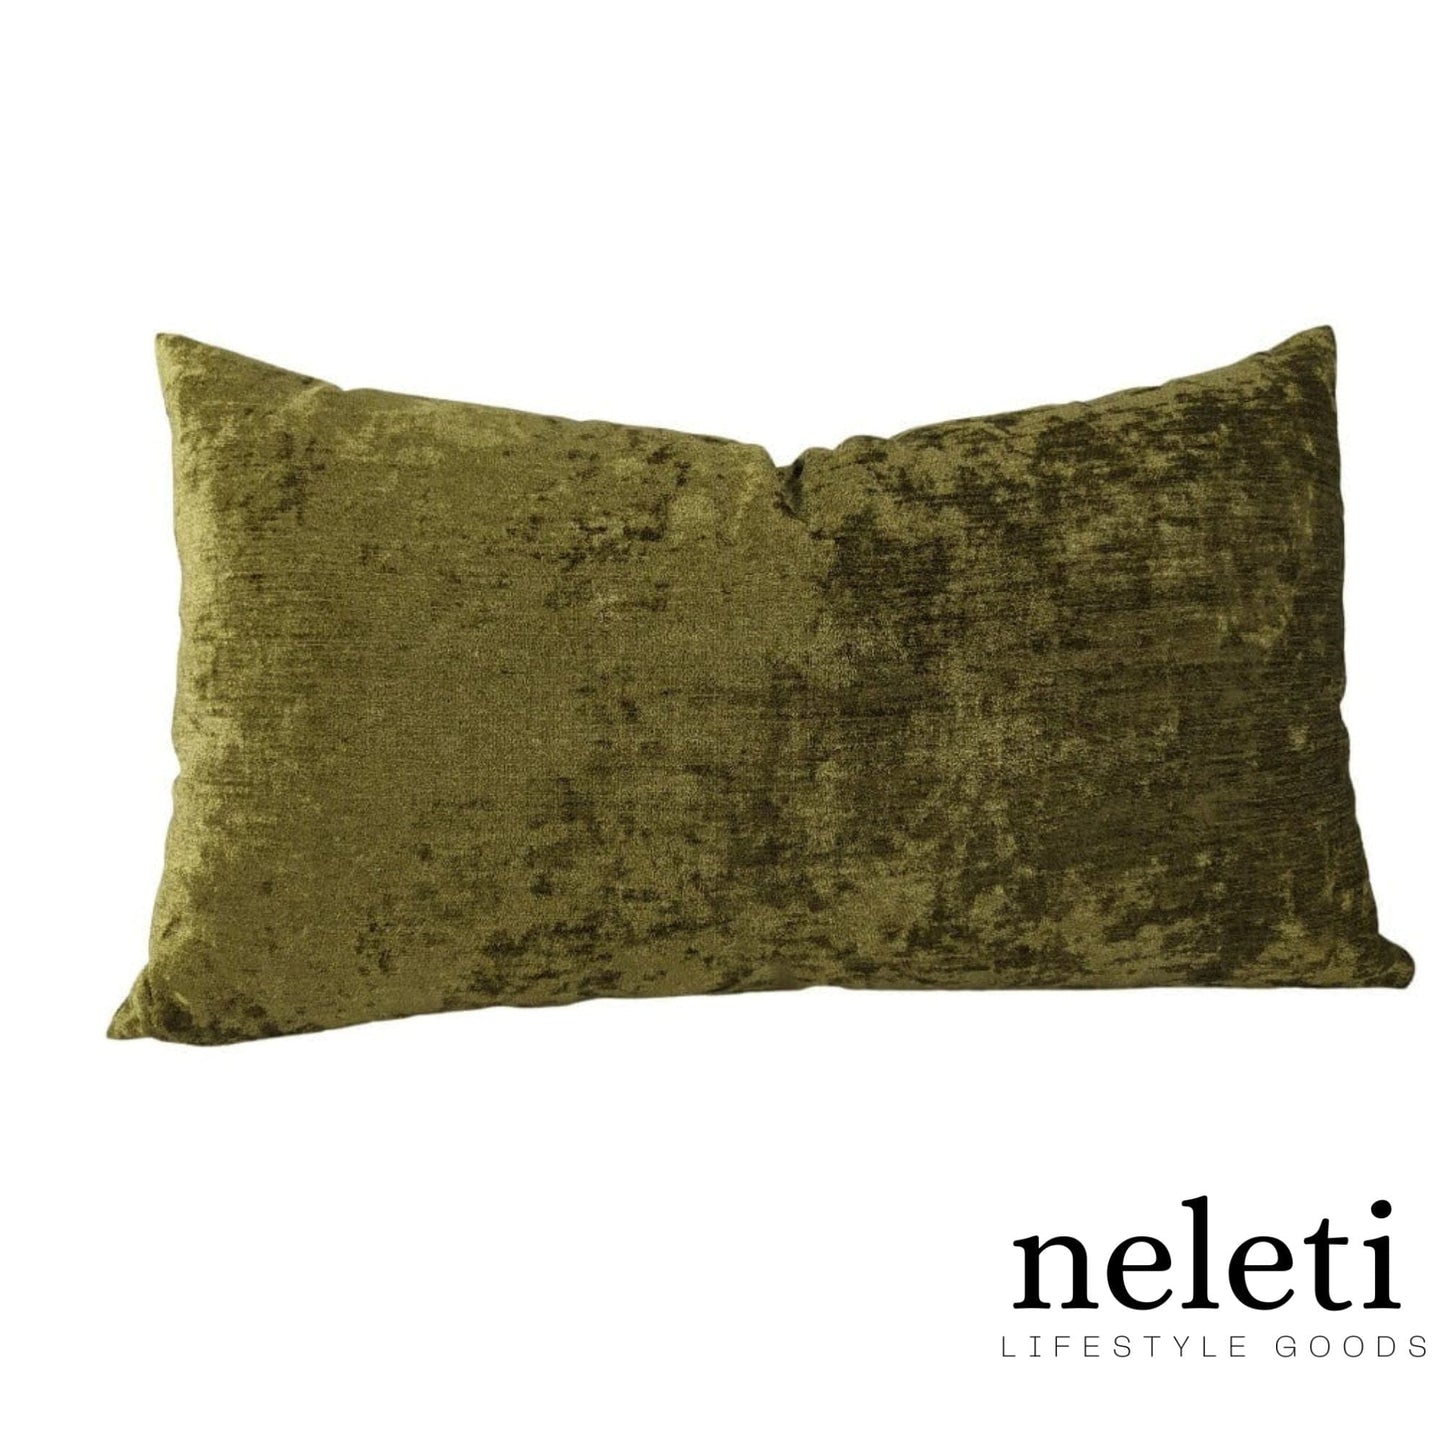 neleti.com-olive-green-chenille-throw-pillow-cover